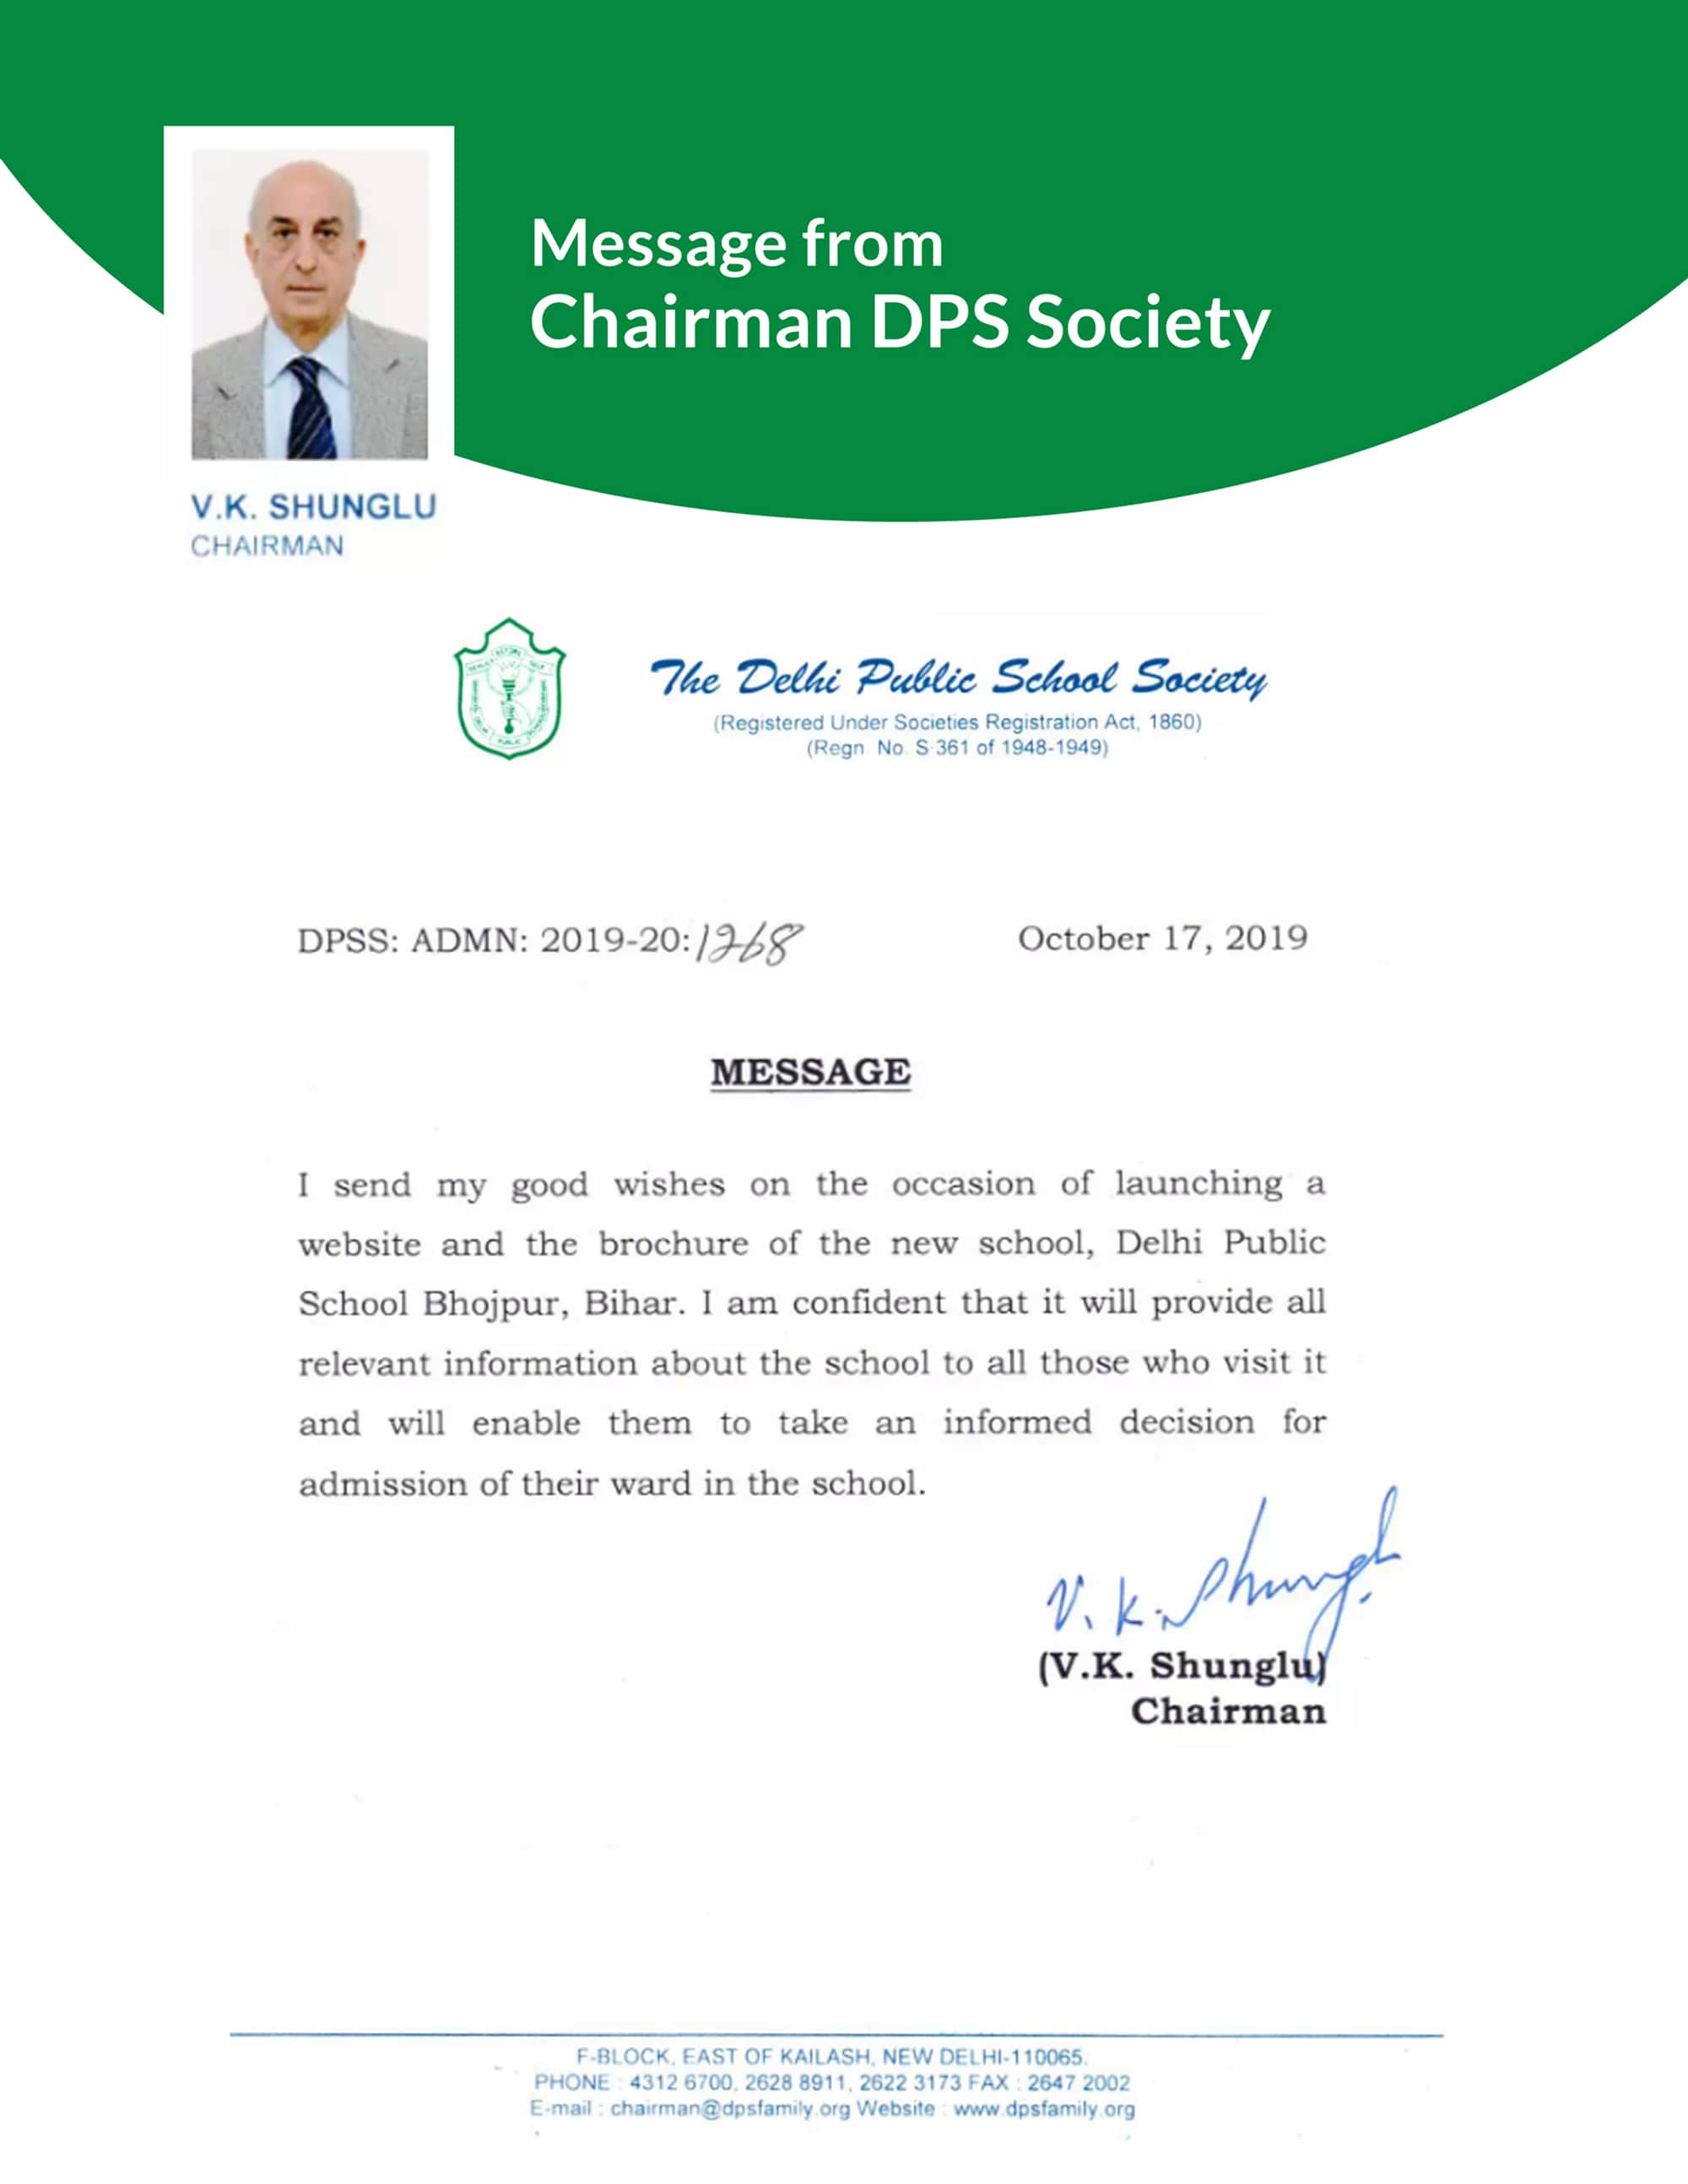 DPS Society Chairman